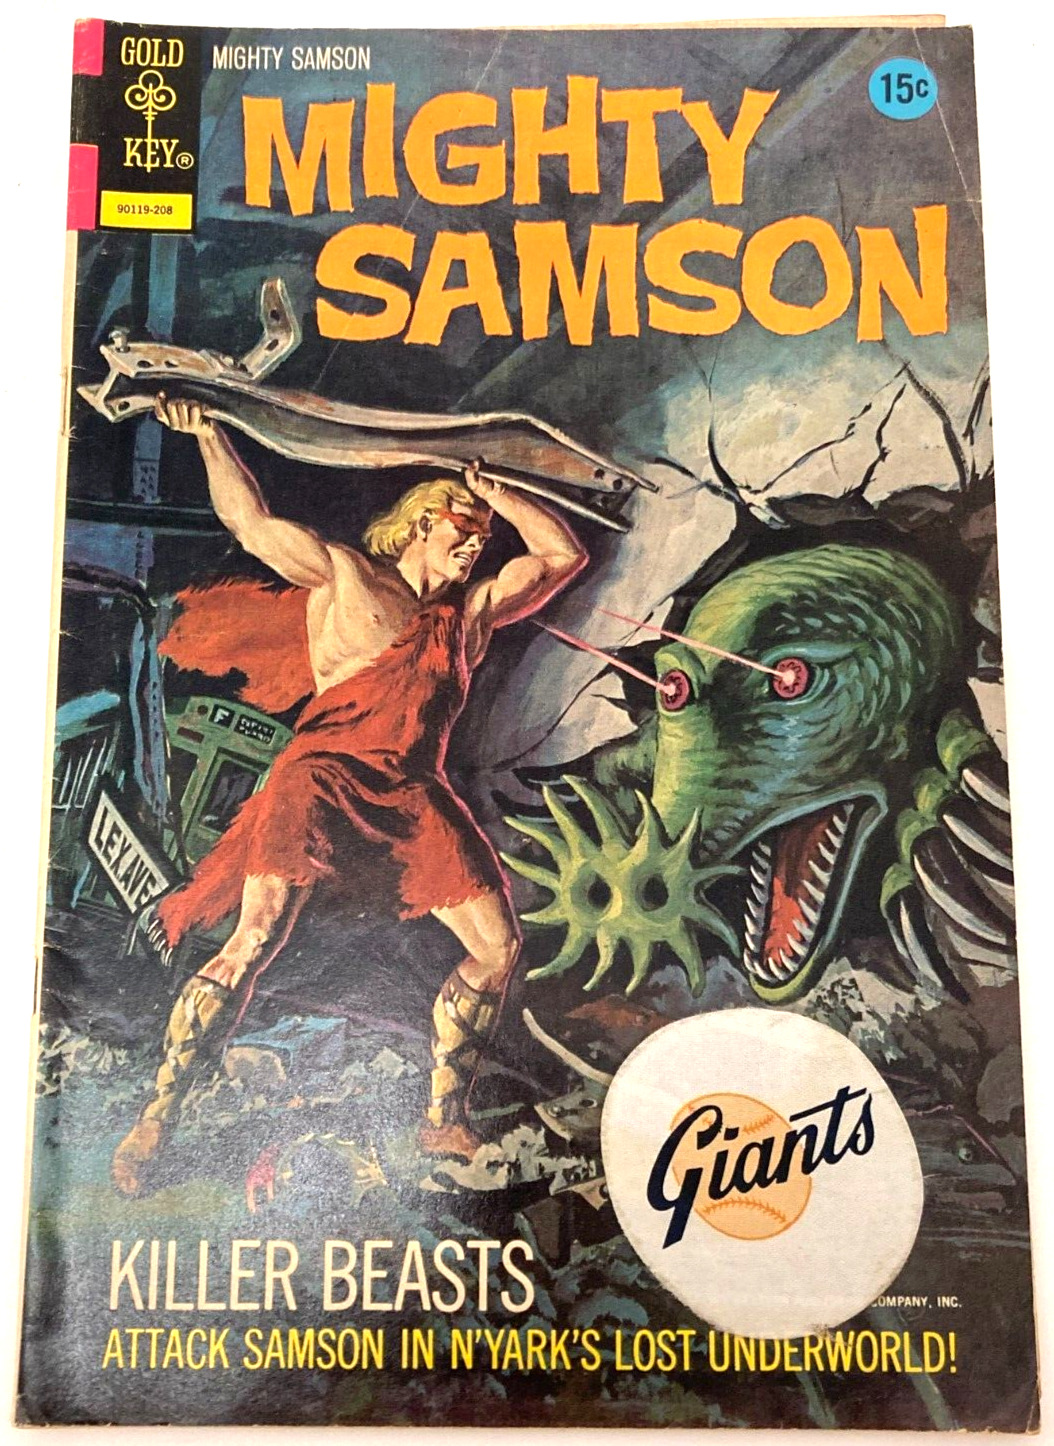 Mighty Samson #21 - Silver Age Gold Key Comics